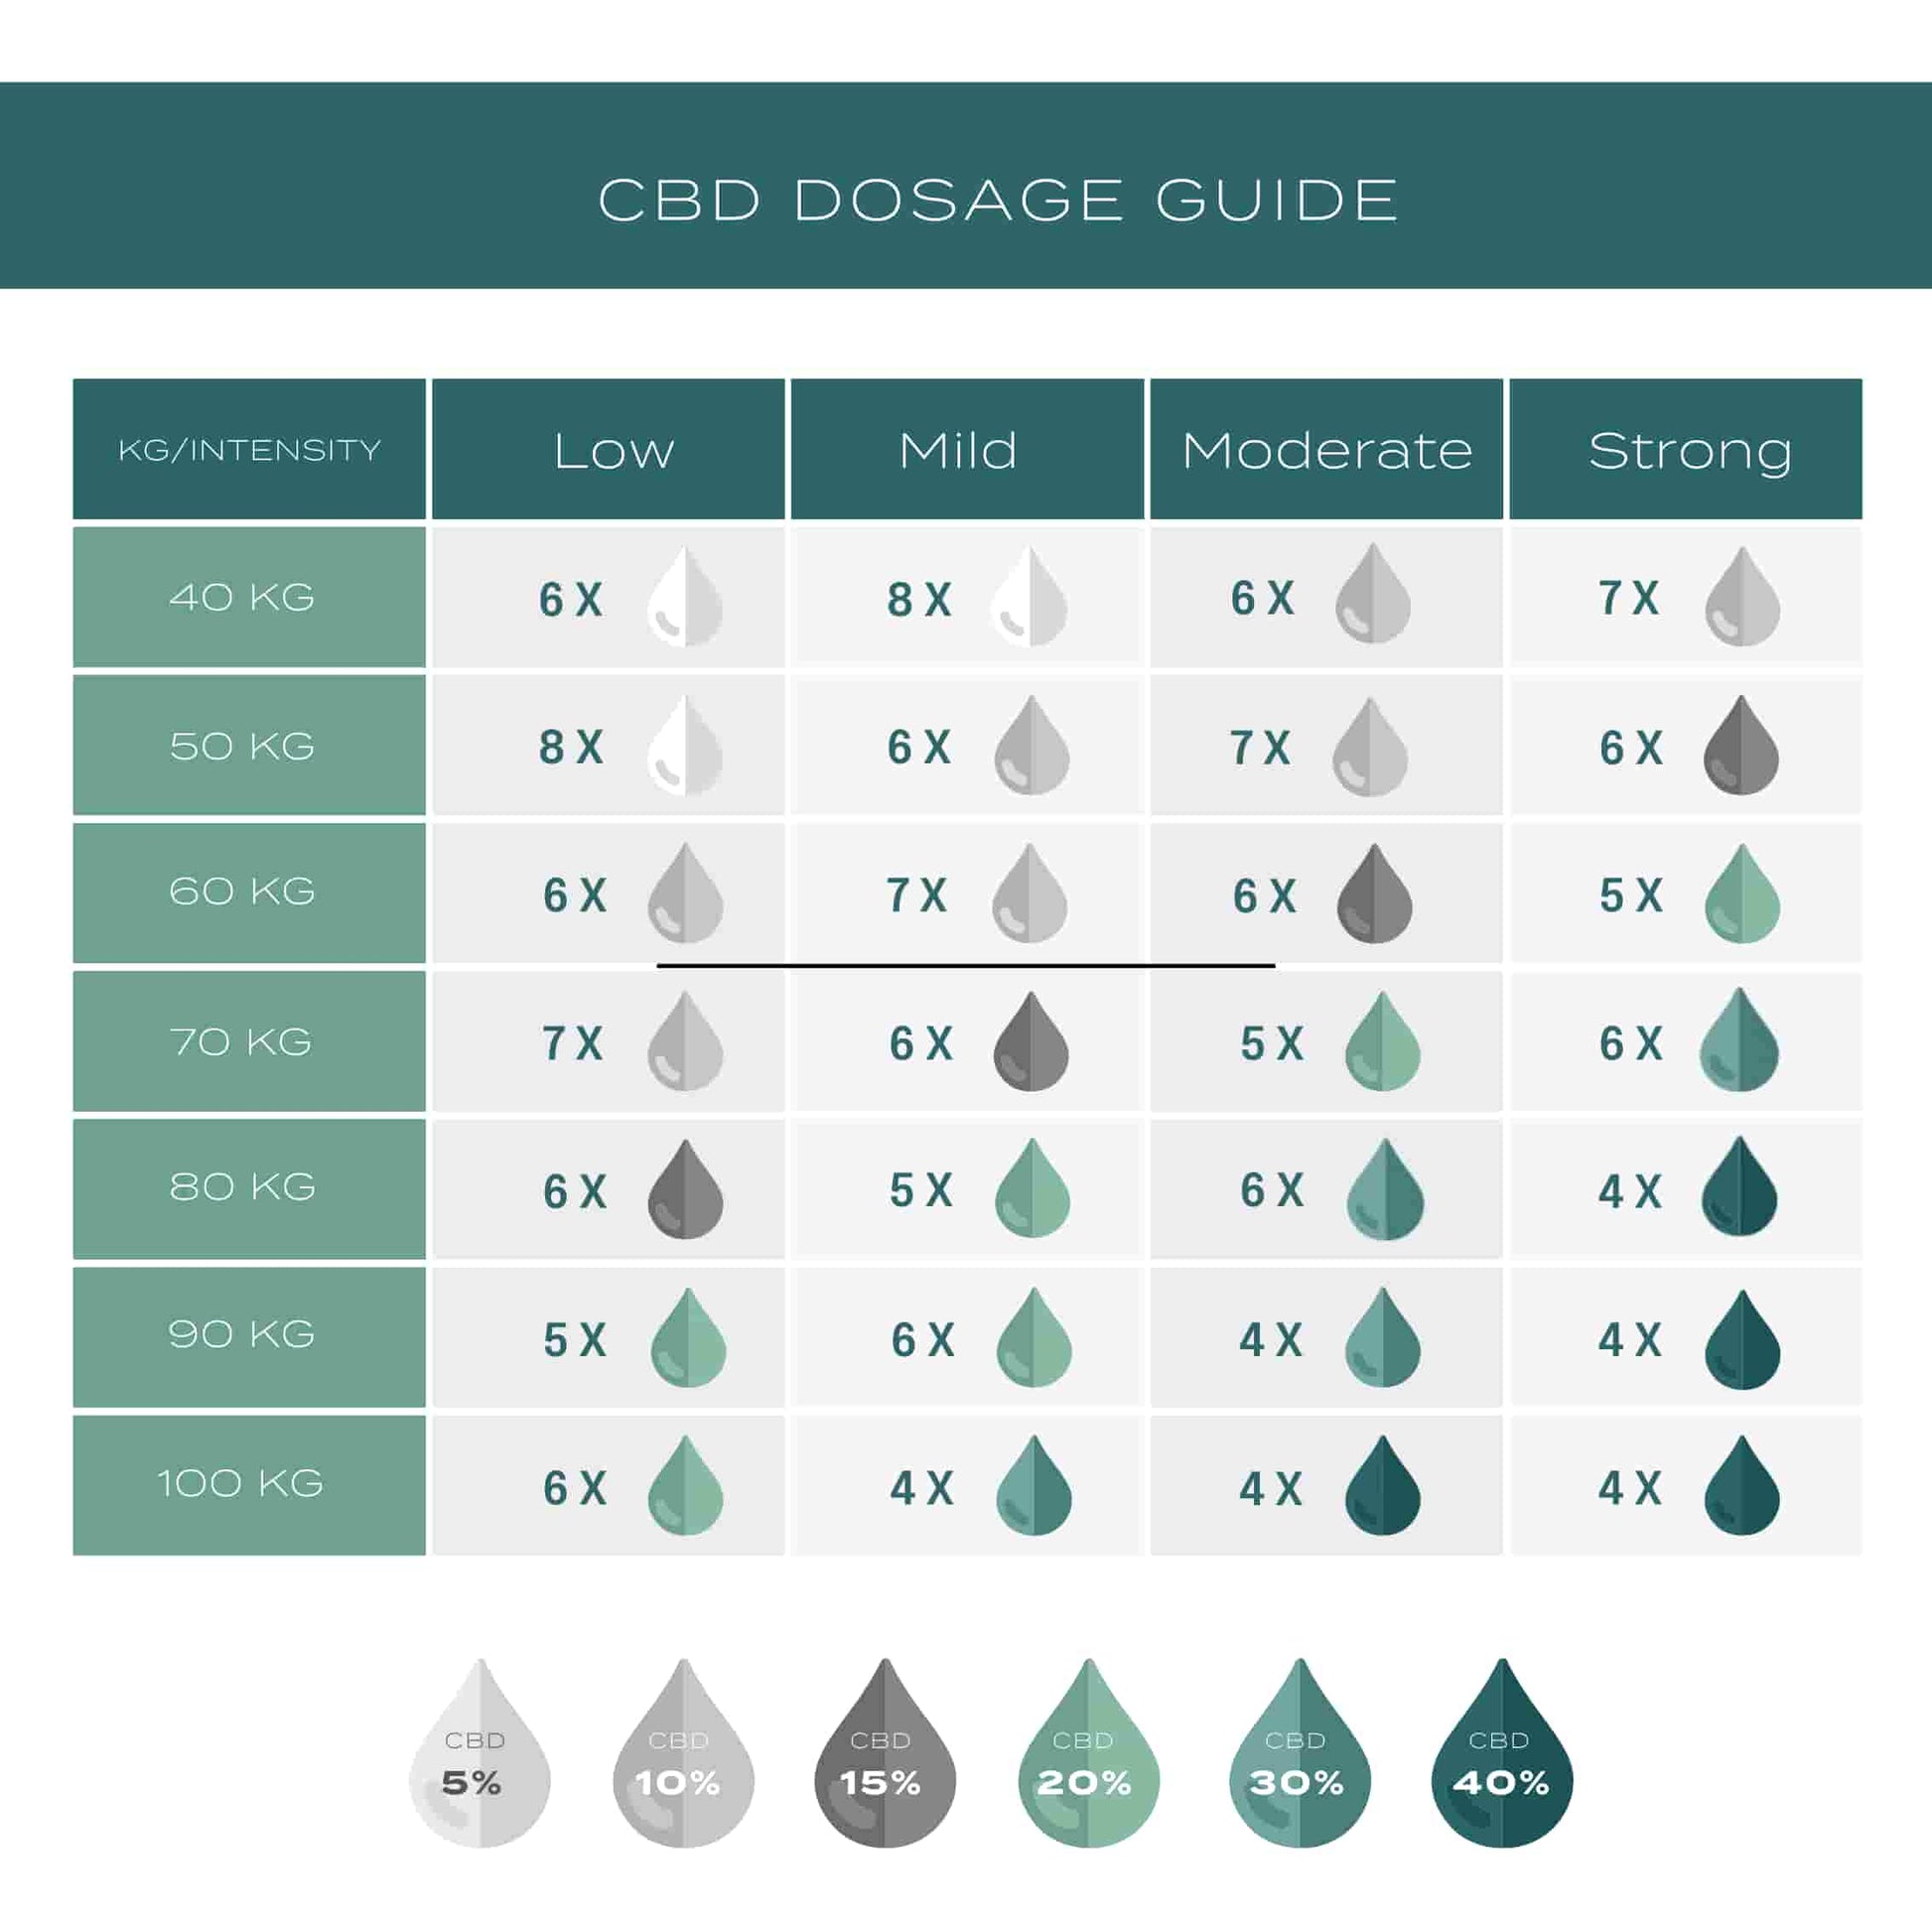 cbd dosage guide: how much cbd